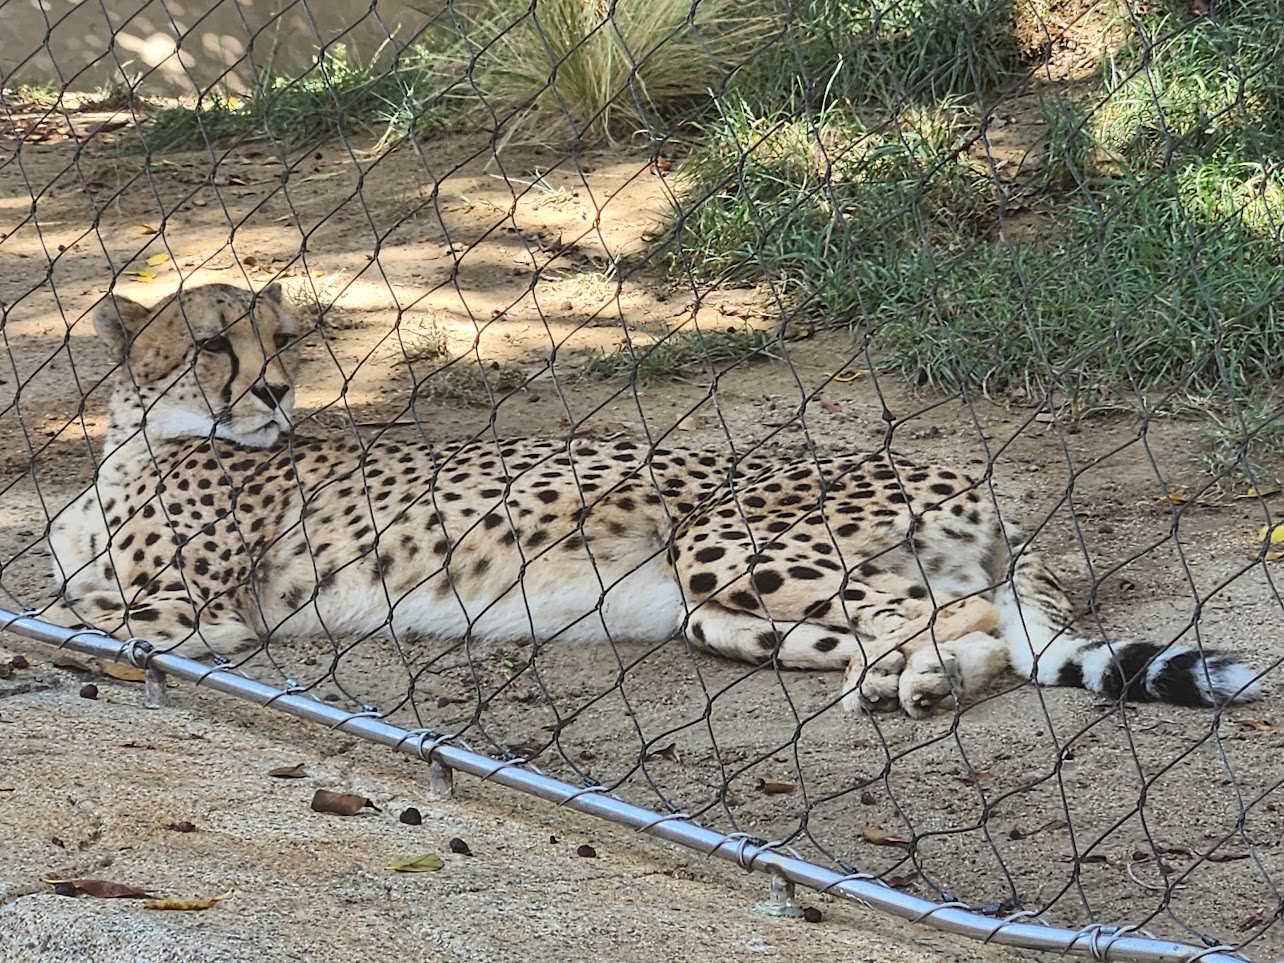 One cheetah relaxing